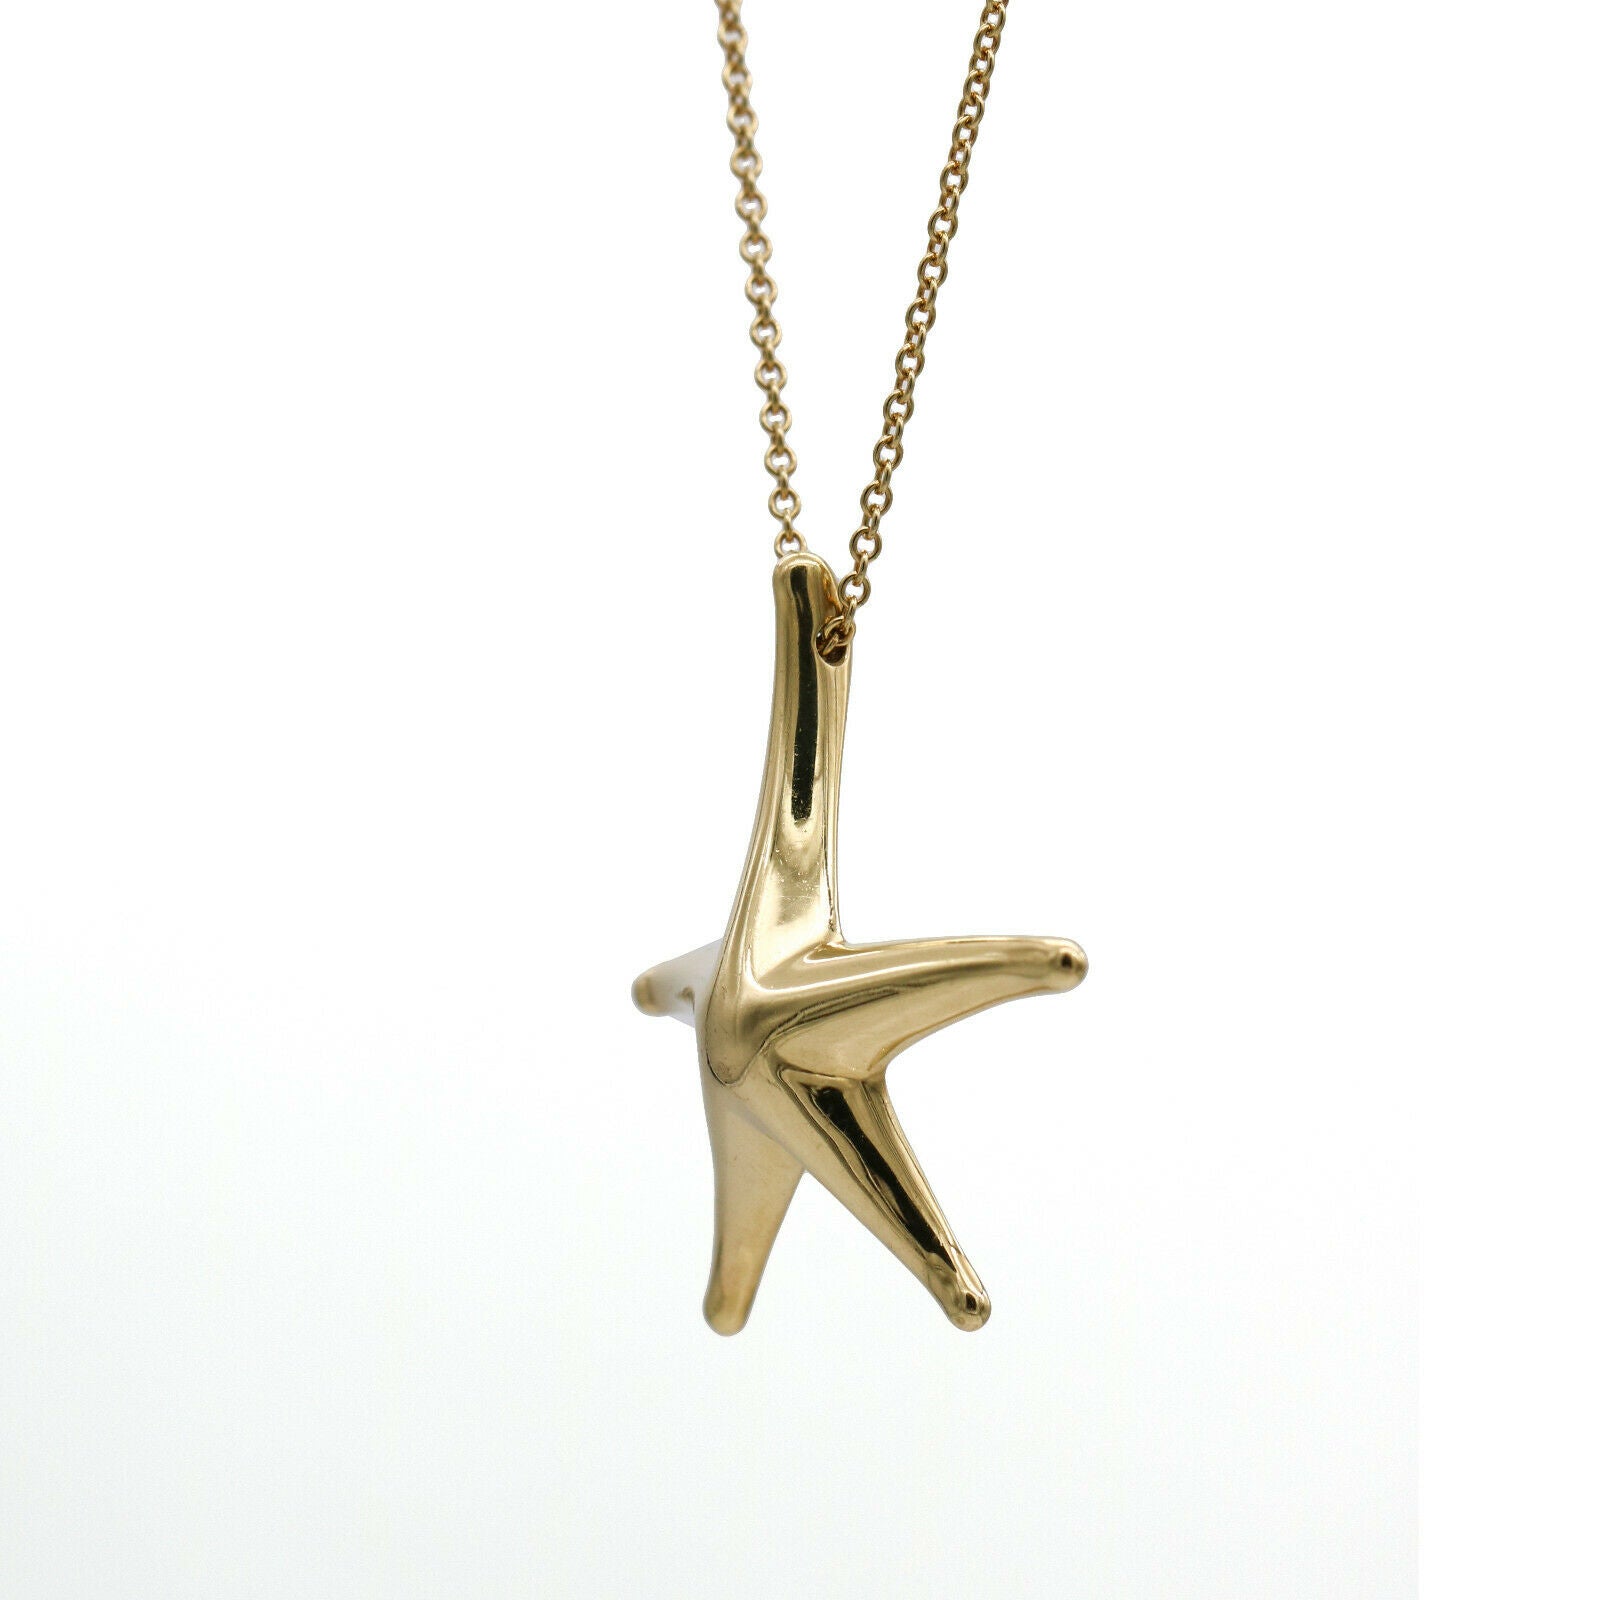 Tiffany & Co. Elsa Peretti Starfish Necklace in 18k Yellow Gold